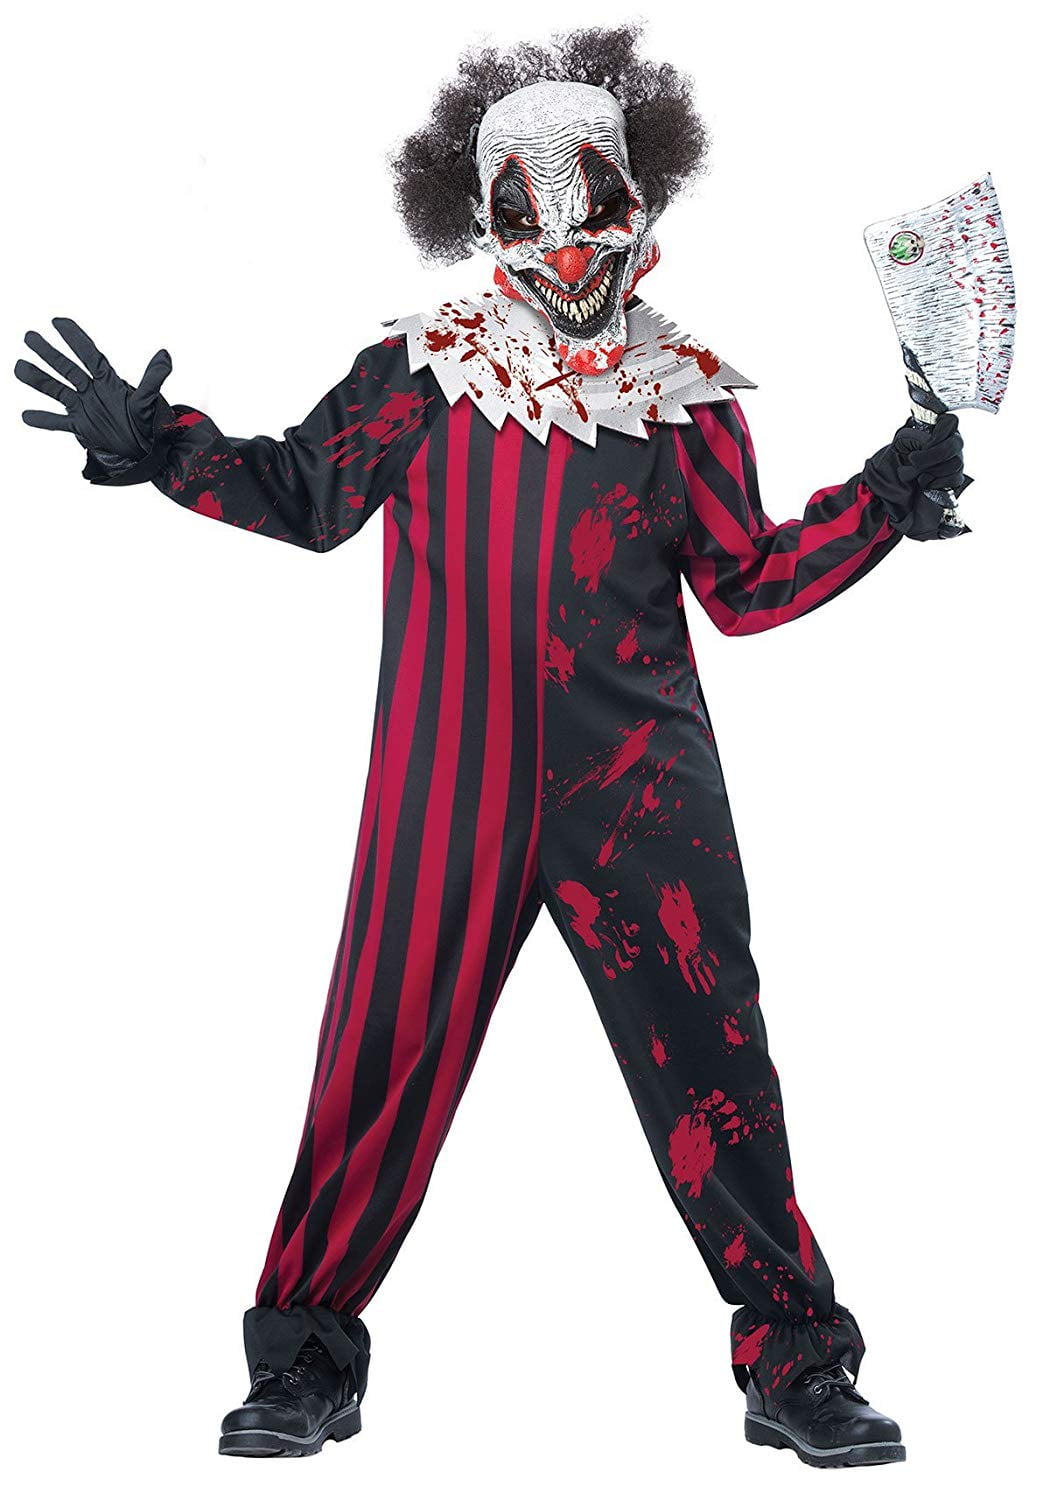 California Costumes Killer Klown Child Costume, Medium - Walmart.com